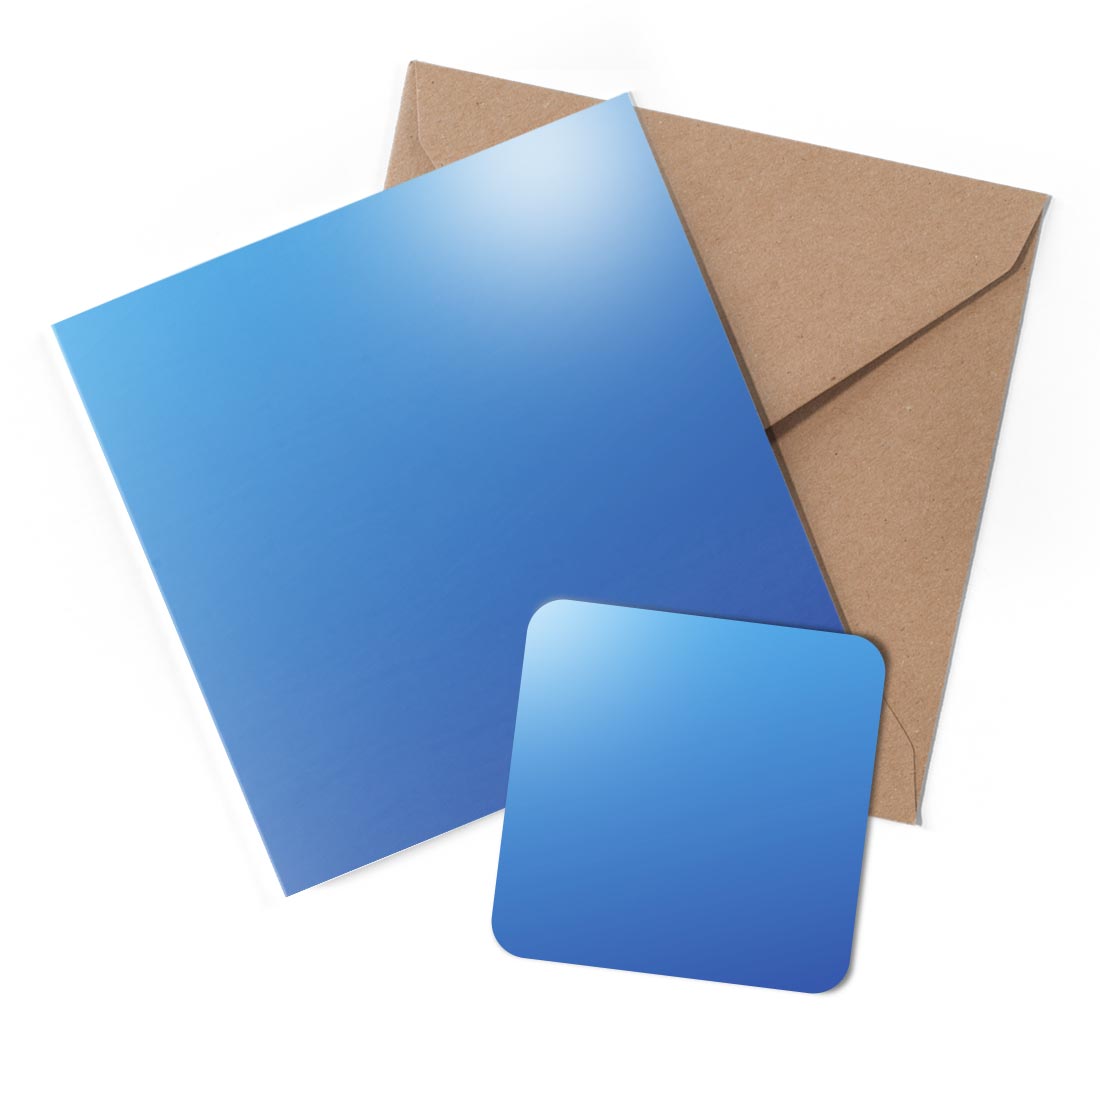 1 x Greeting Card & Coaster Set - Medium Blue Colour Block #51432